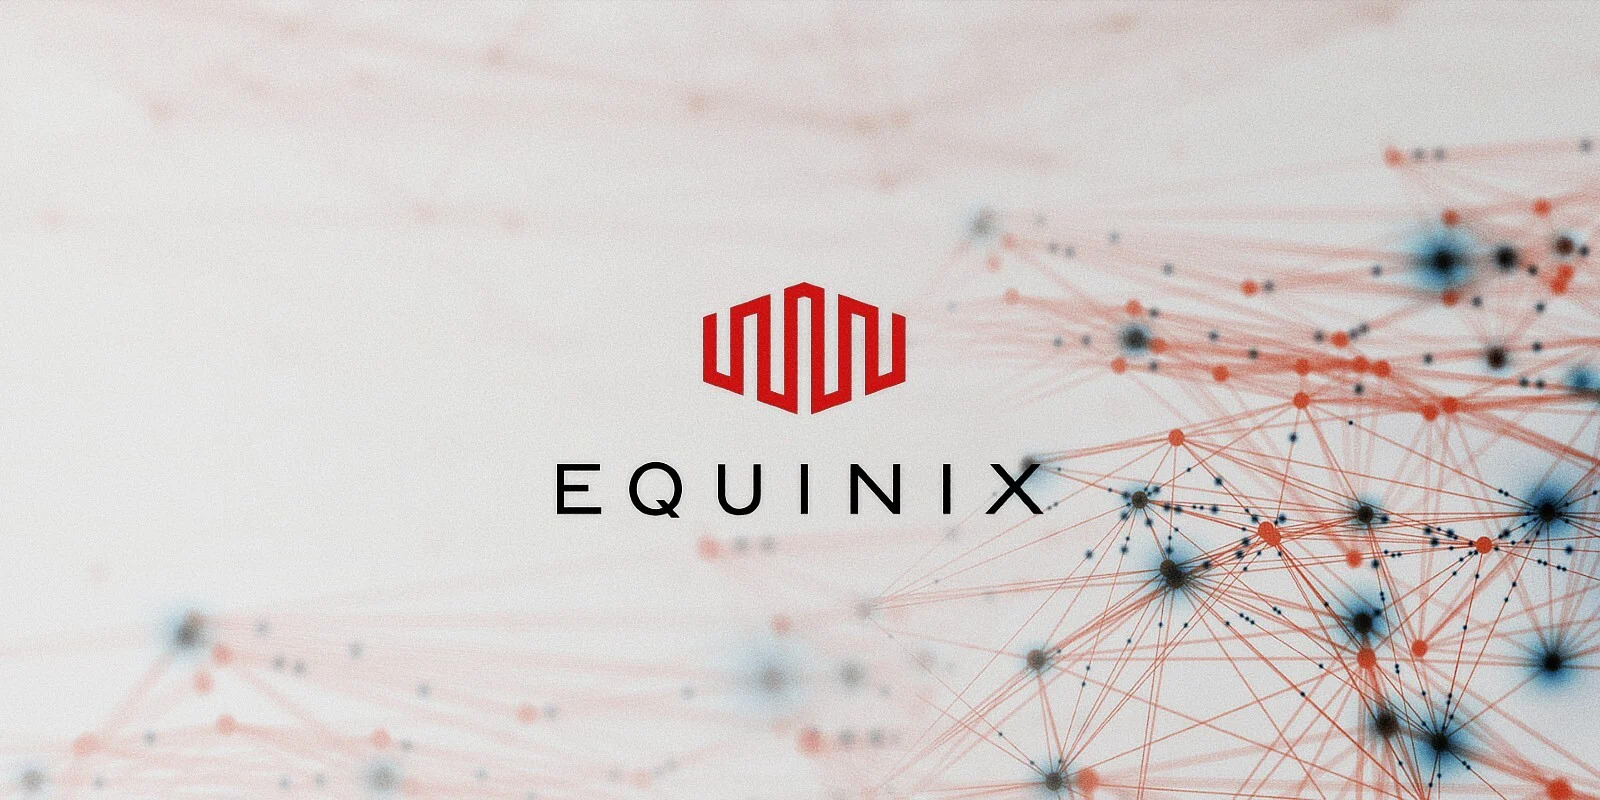 Equinix's logo (courtsey of BleepingComputer)